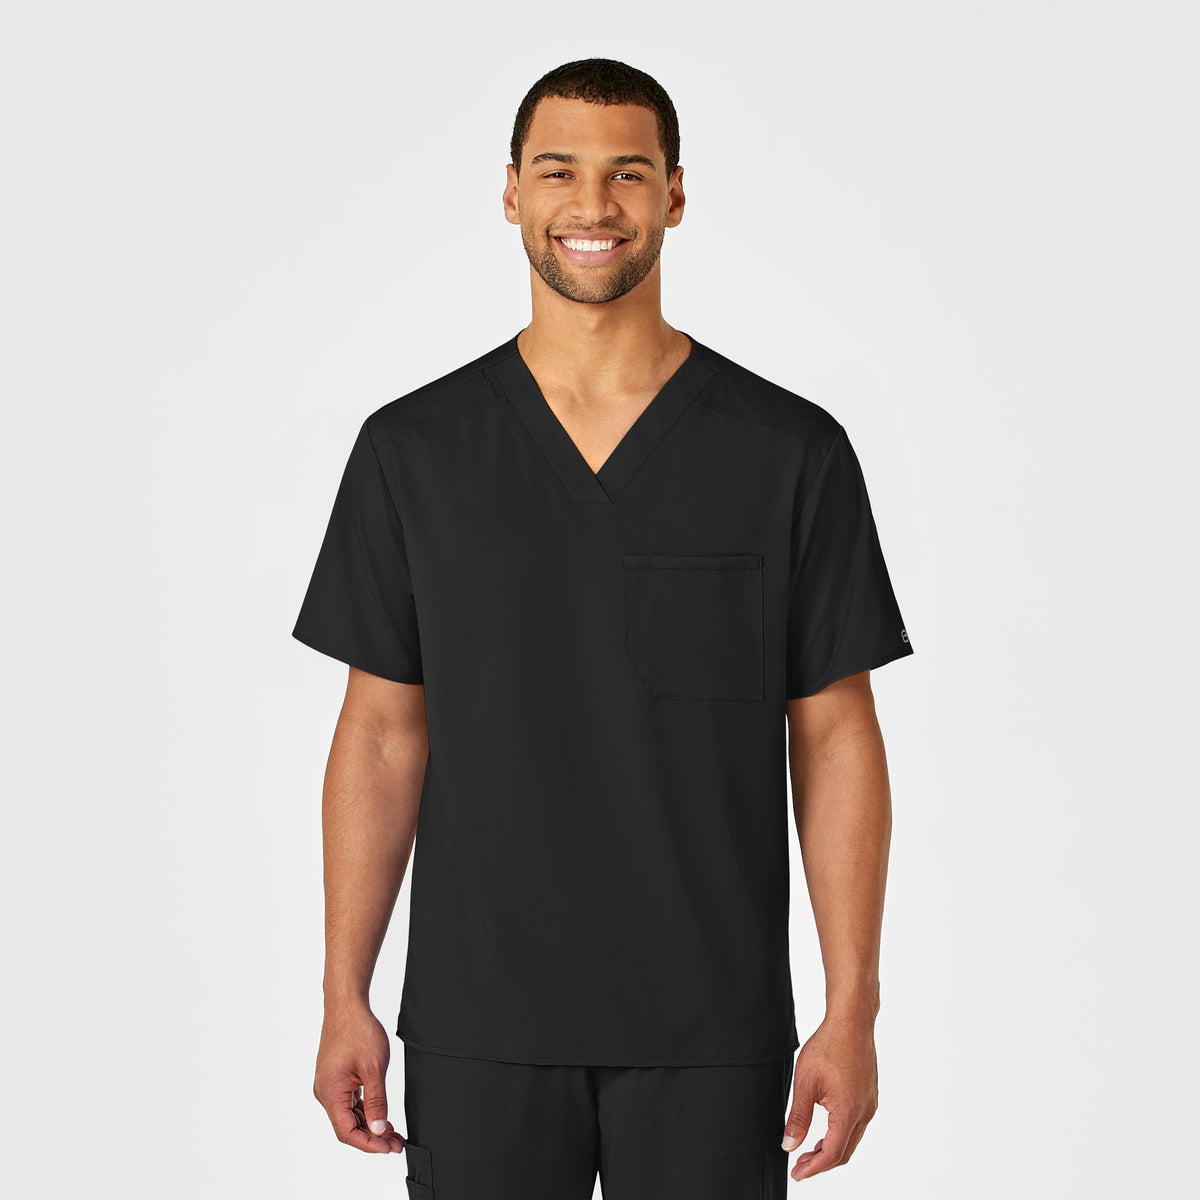 Men's Black Scrubs - Shop Jackets, Tops & Bottoms